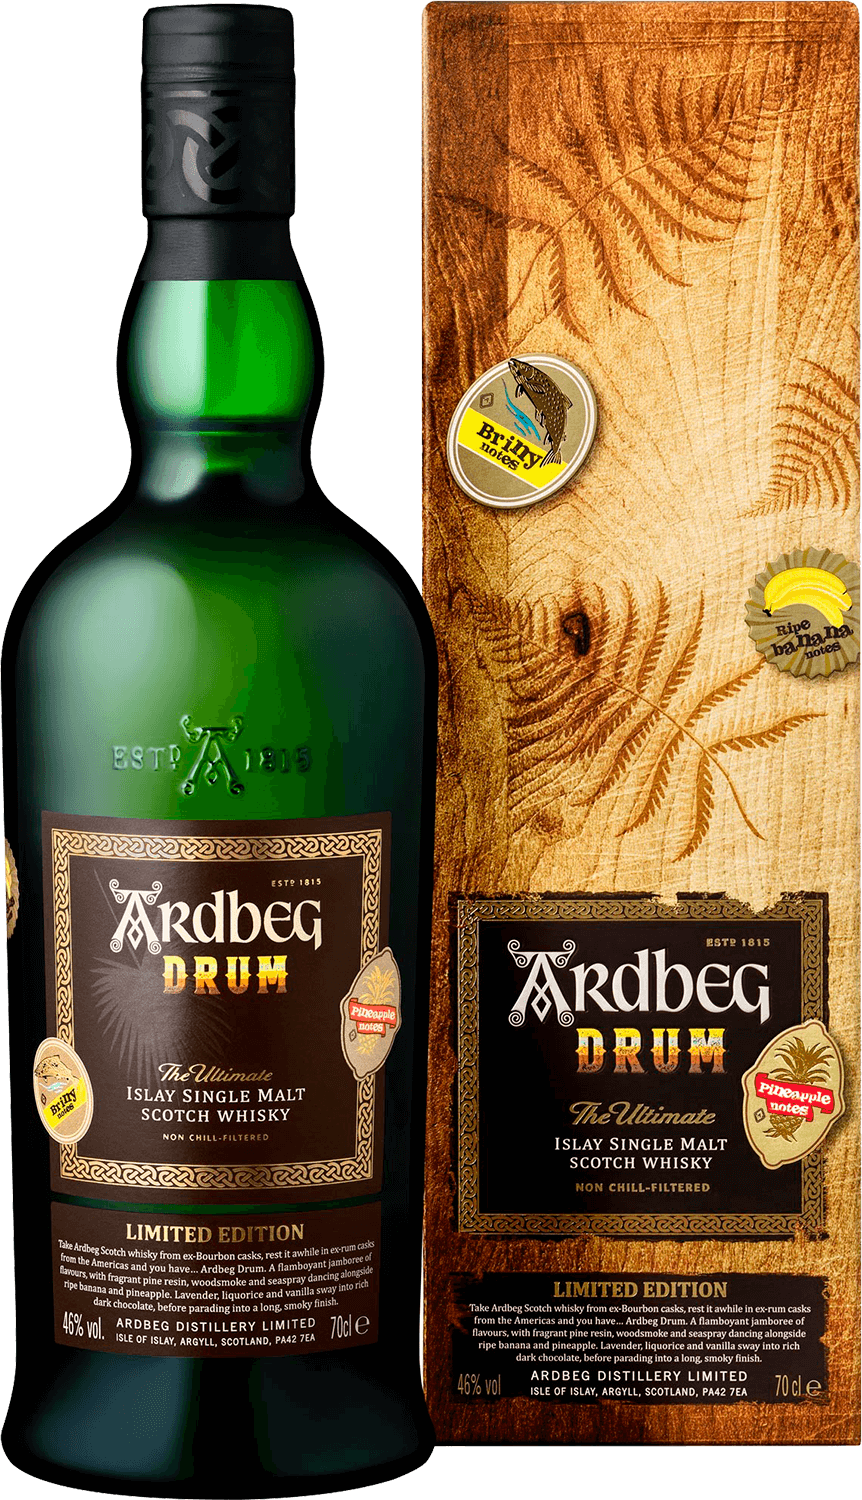 Ardbeg Drum Islay Single Malt Scotch Whisky (gift box) game of thrones house lannister lagavulin 9 y o islay single malt scotch whisky gift box